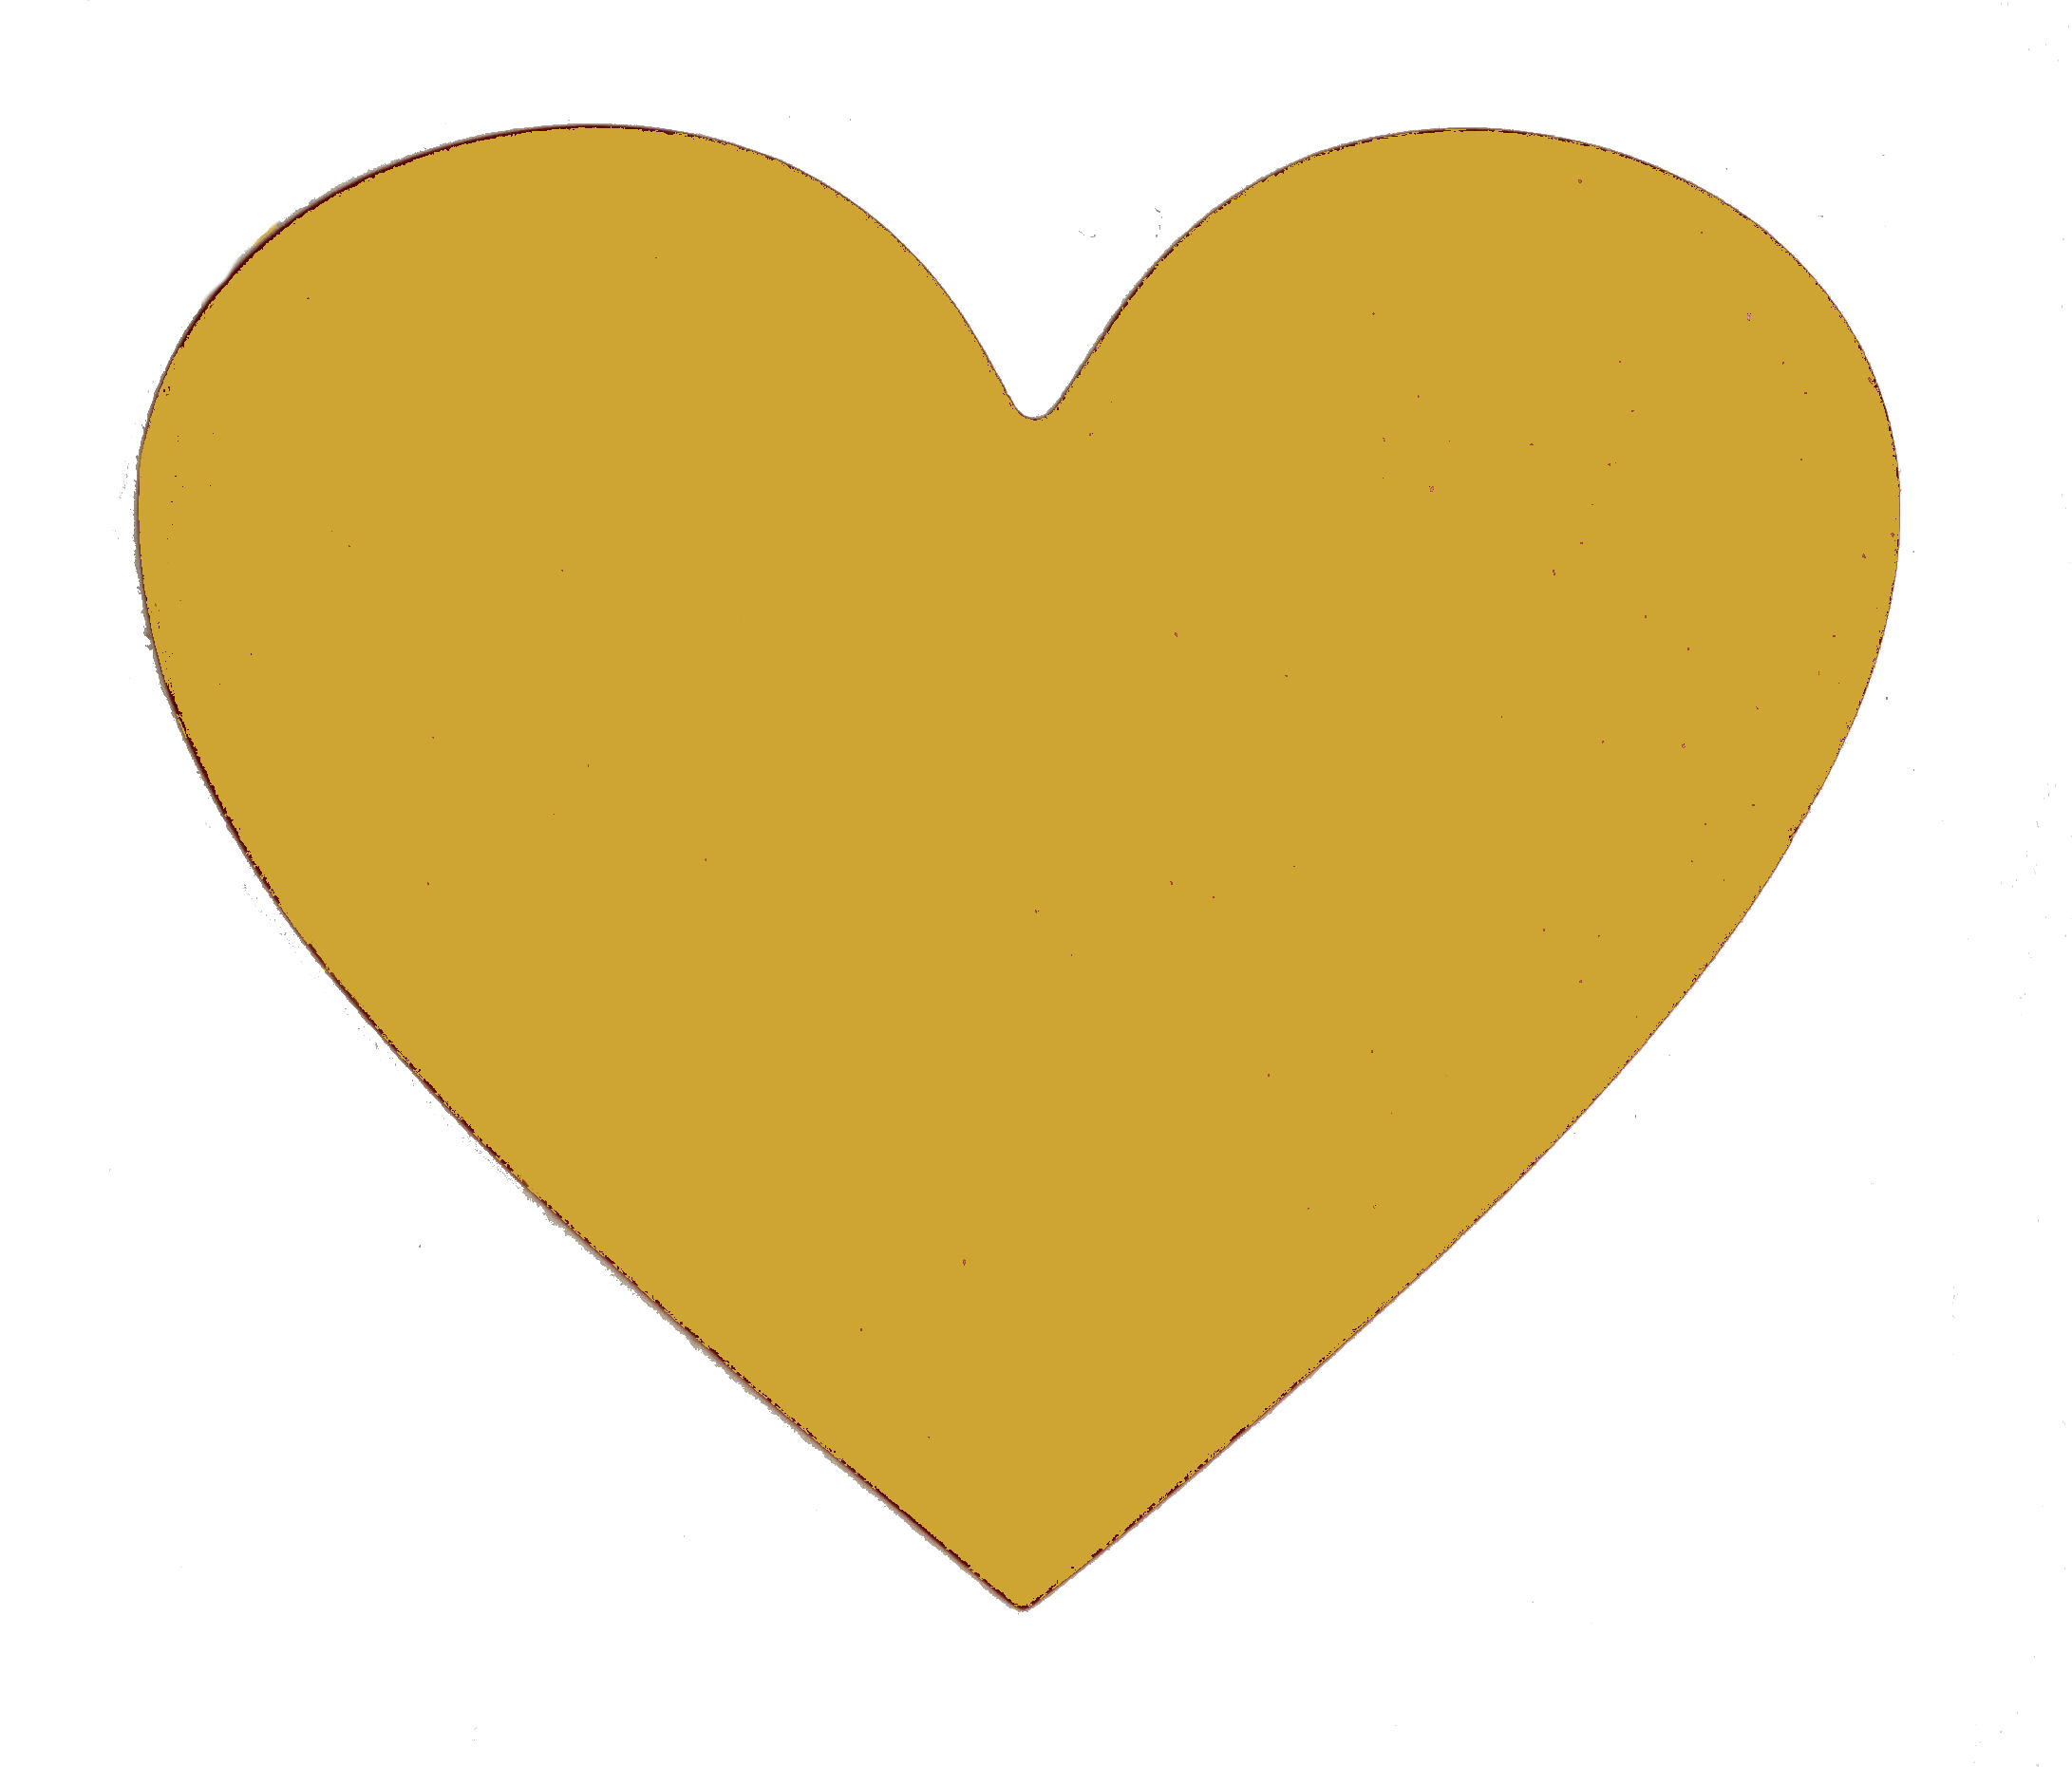 krassticker goudkleurig 7 cm x 8 cm hartvorm, hartjes krassticker, kraskaart zelf maken